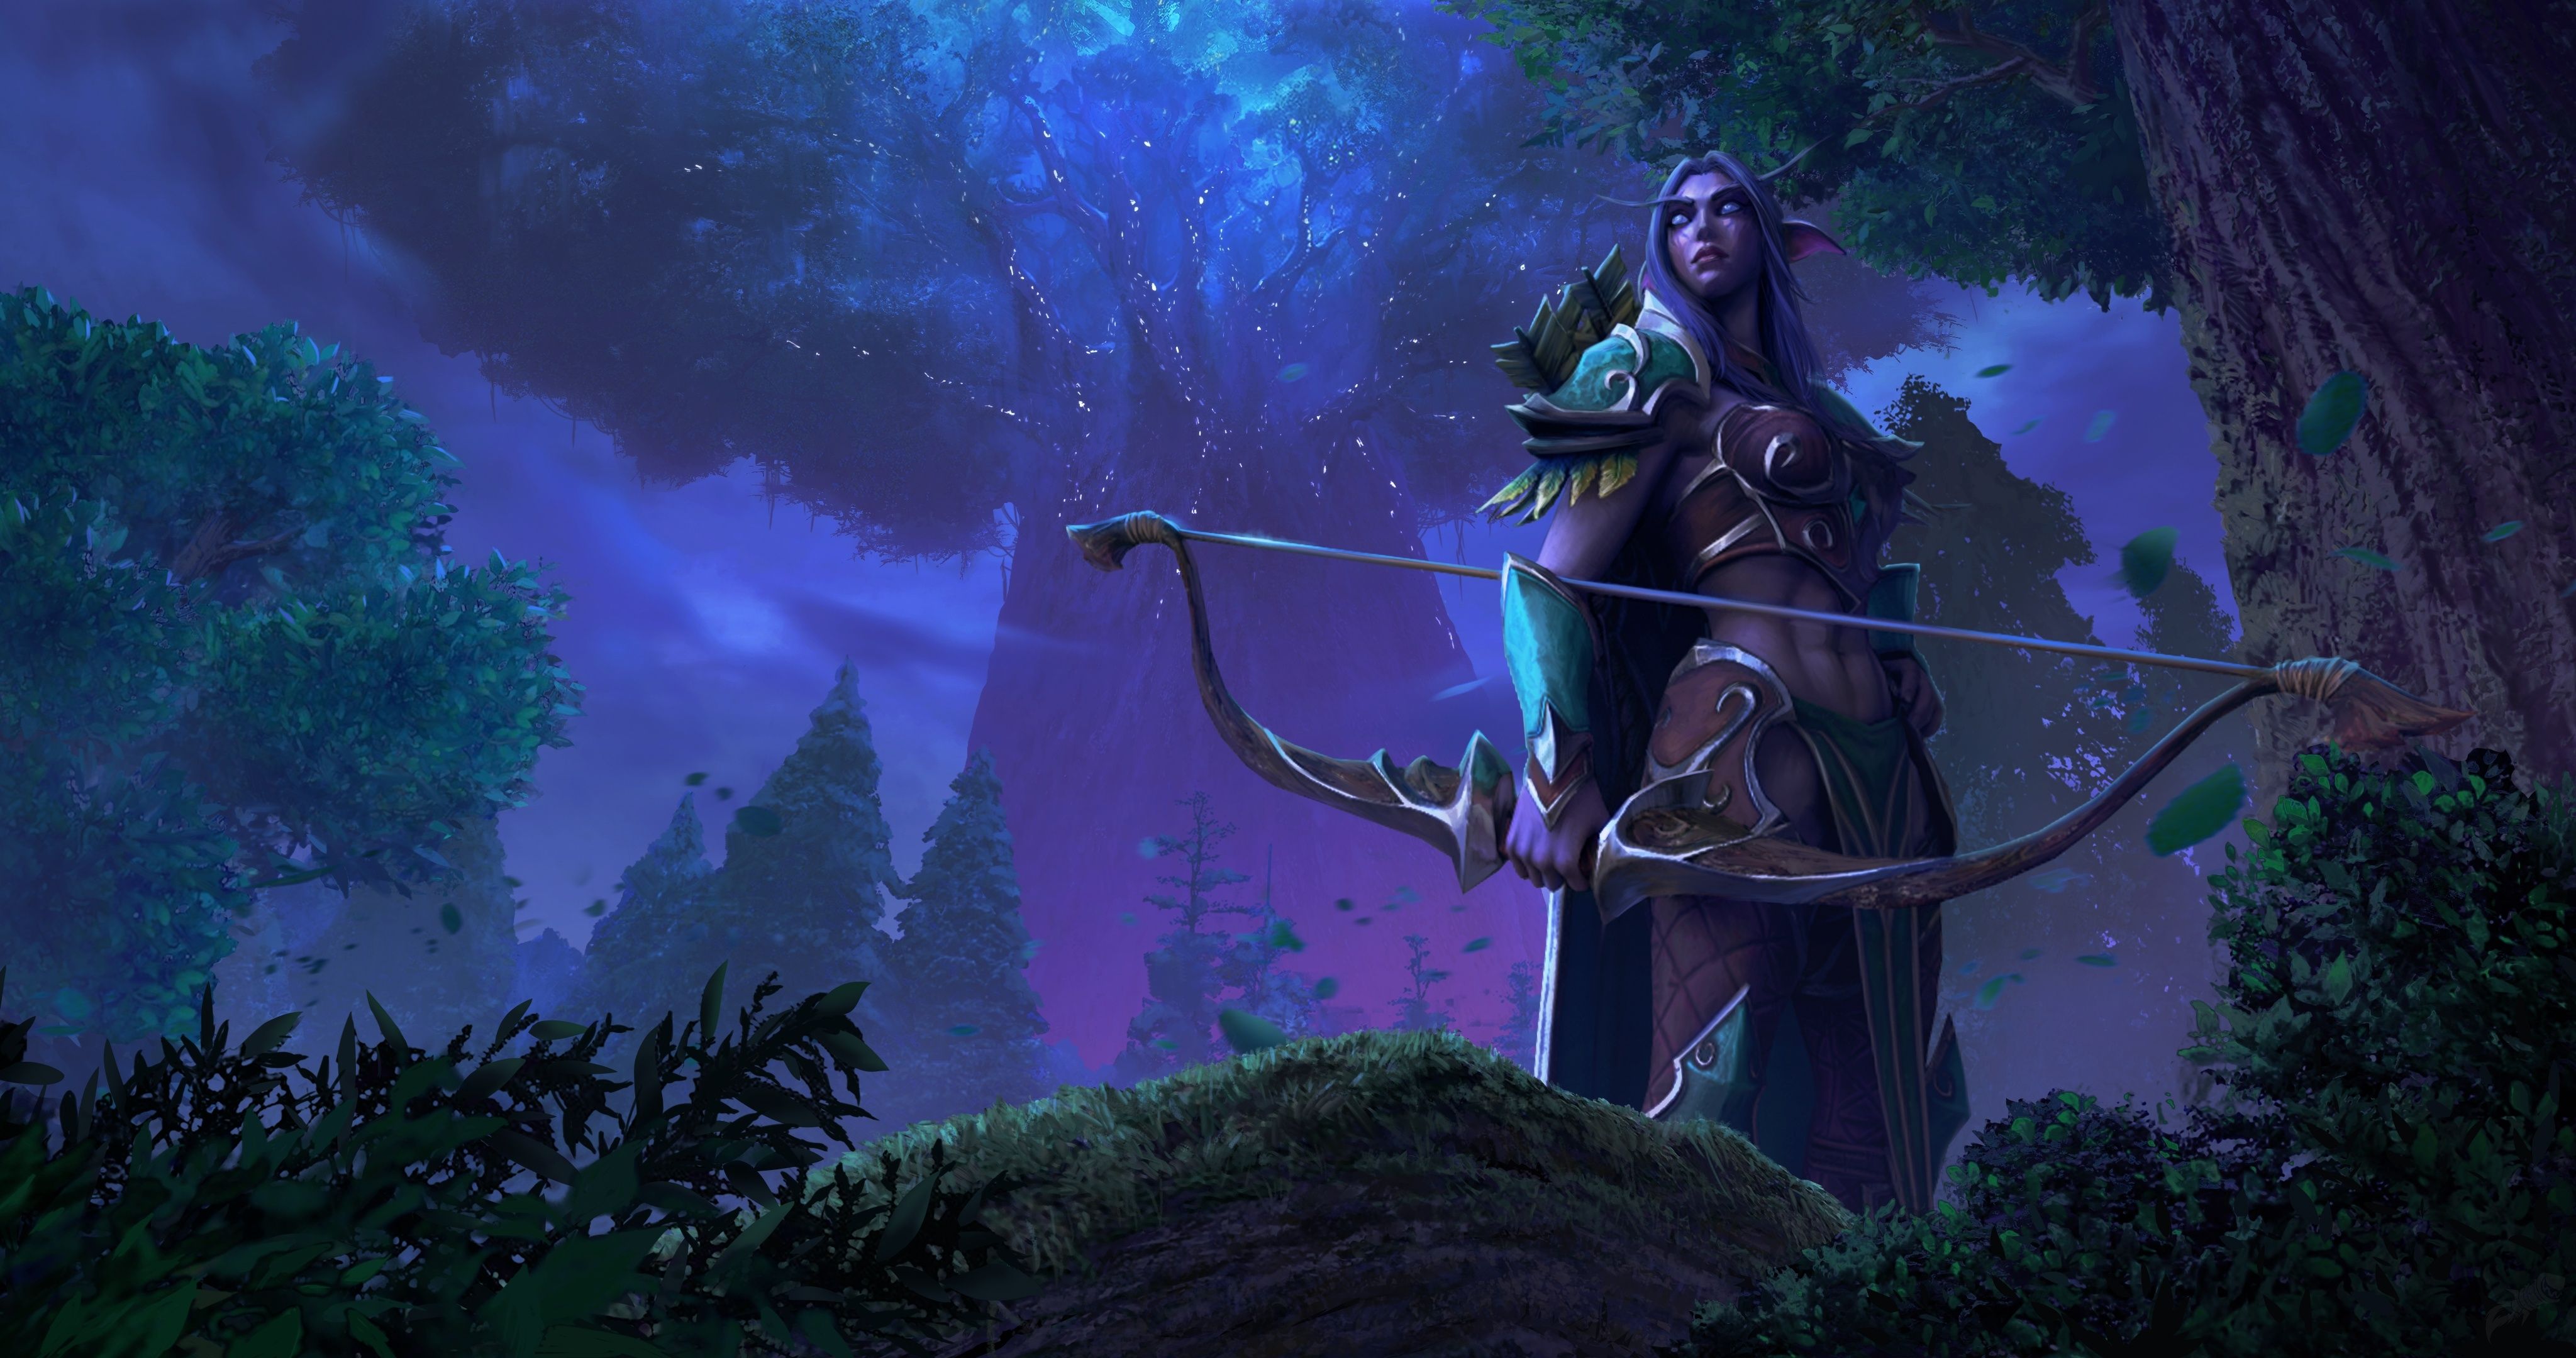 Обои из Warcraft III: Reforged | Источник: wowhead.com